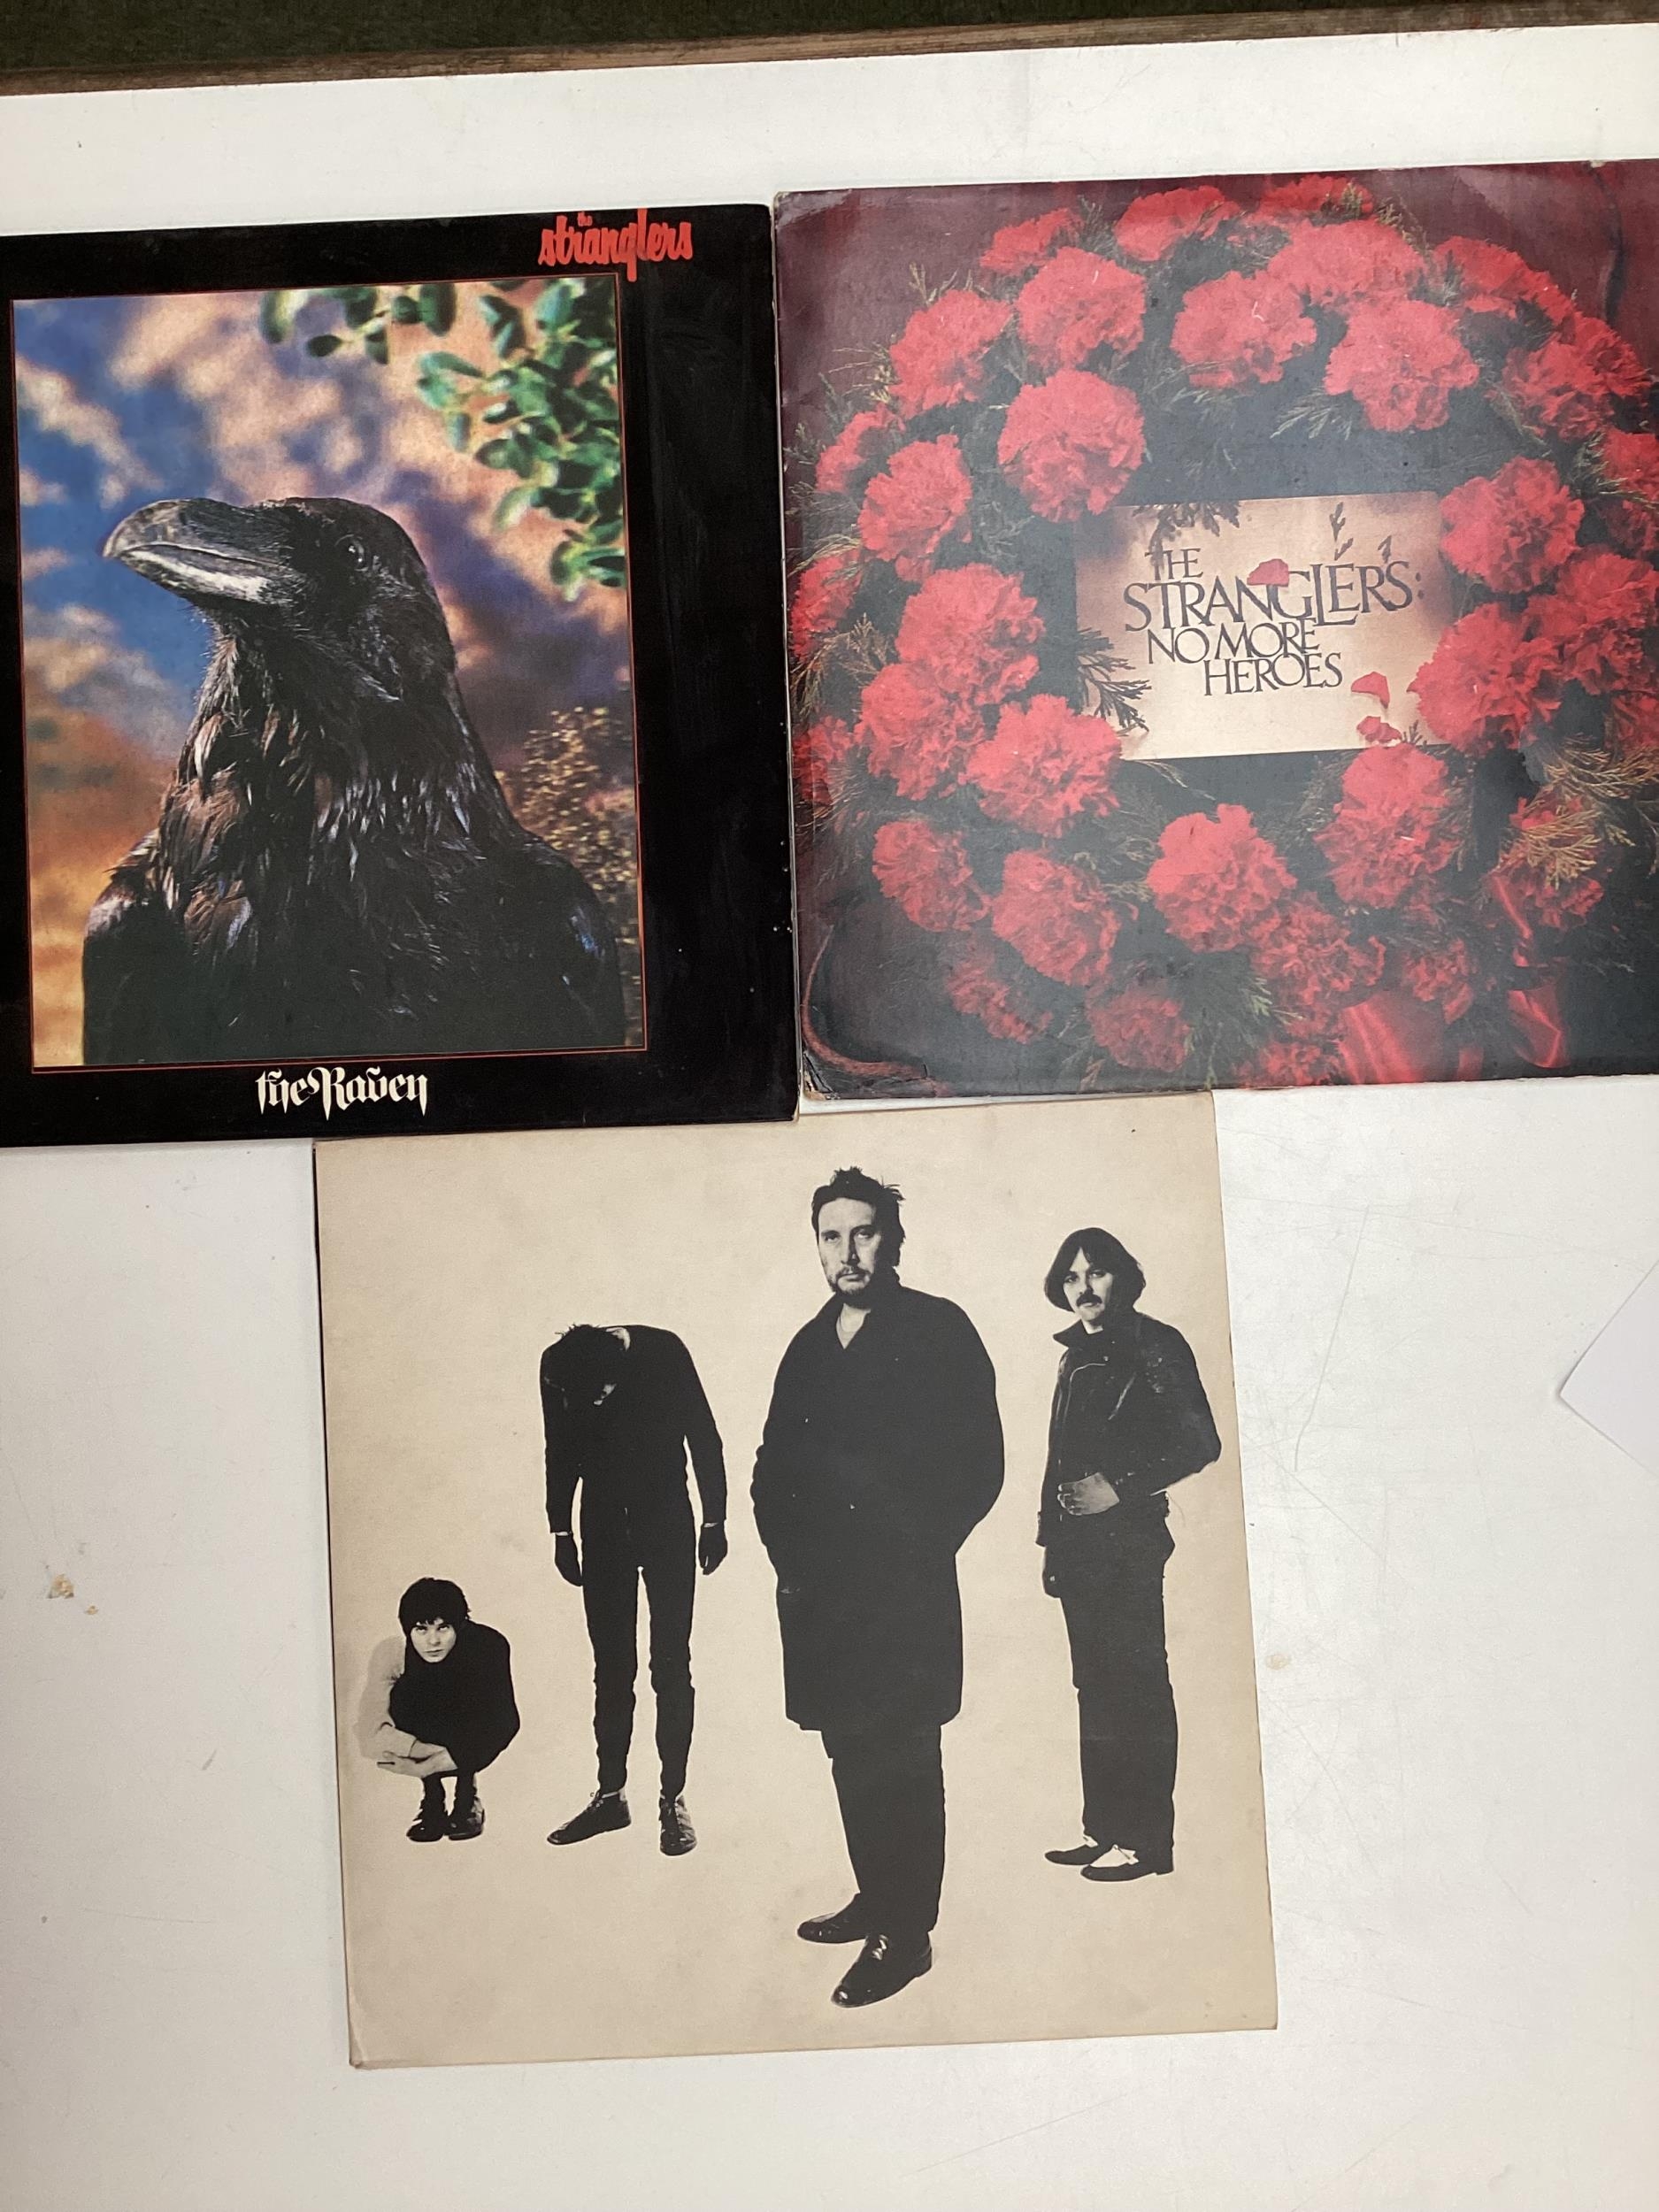 Vinyl records, 3. The Stranglers, The Raven, The Stranglers, The Stranglers No More Heroes.